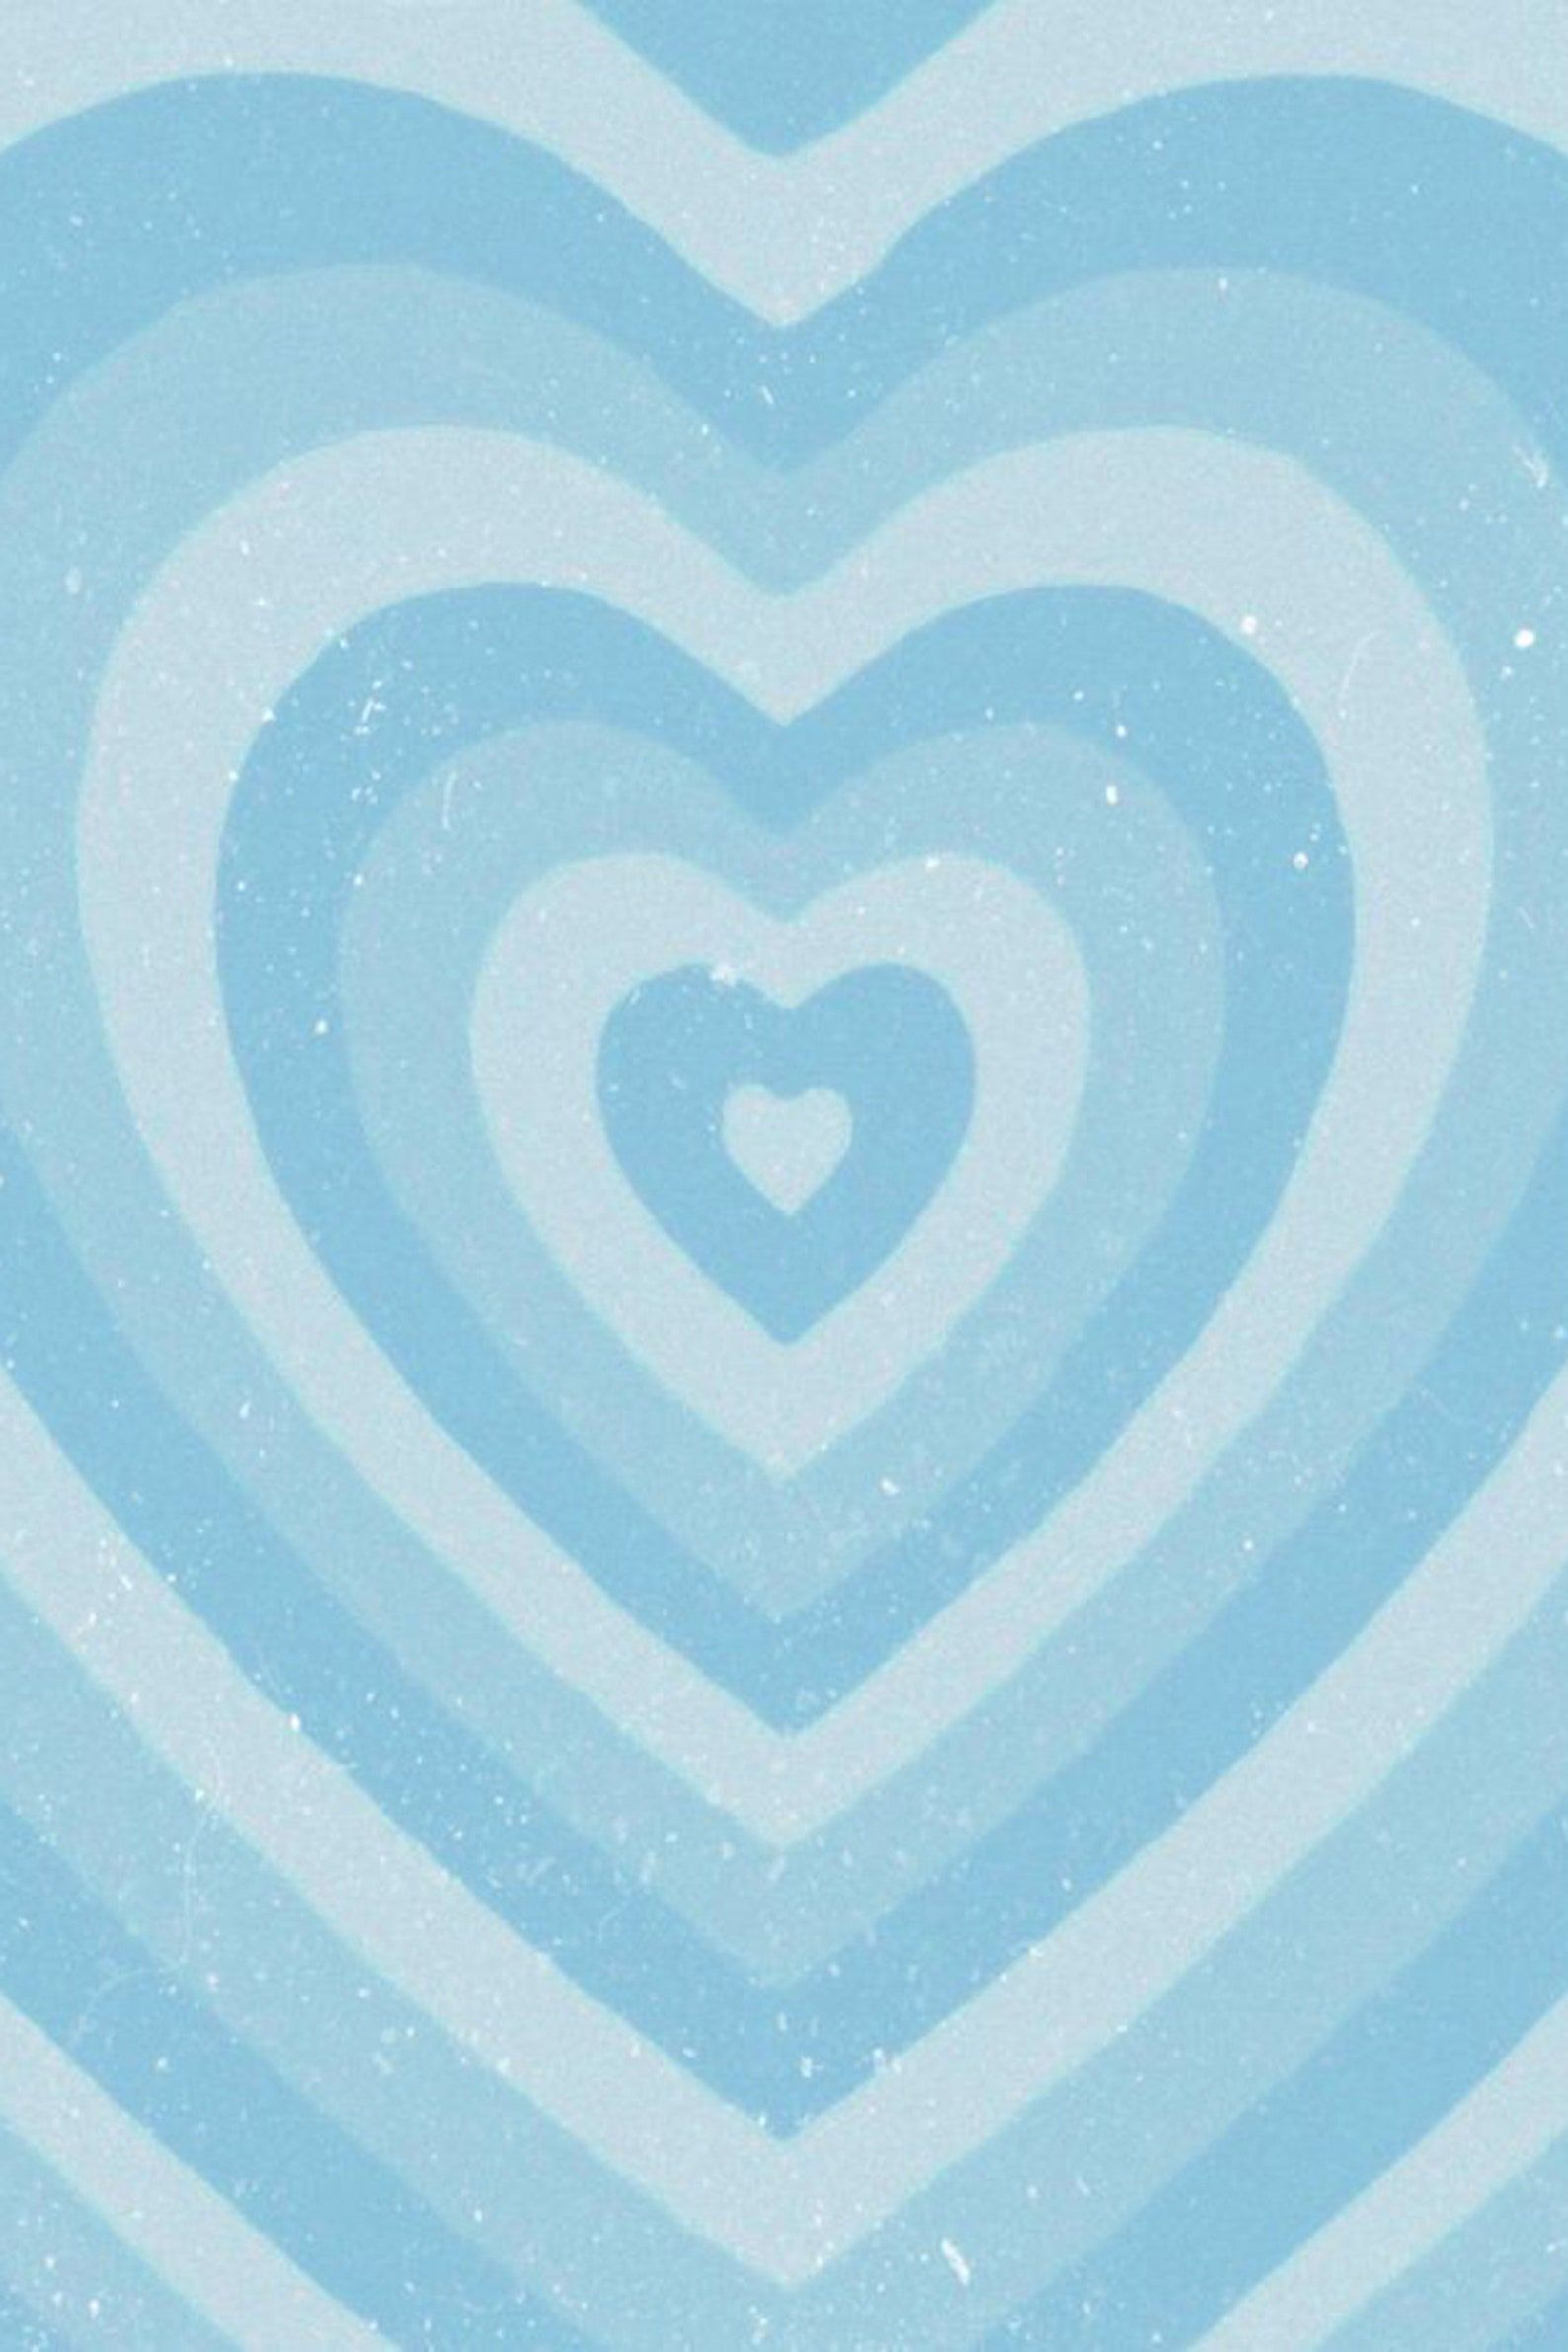 Blue heart wallpaper aesthetic phone background for any phone - Danish